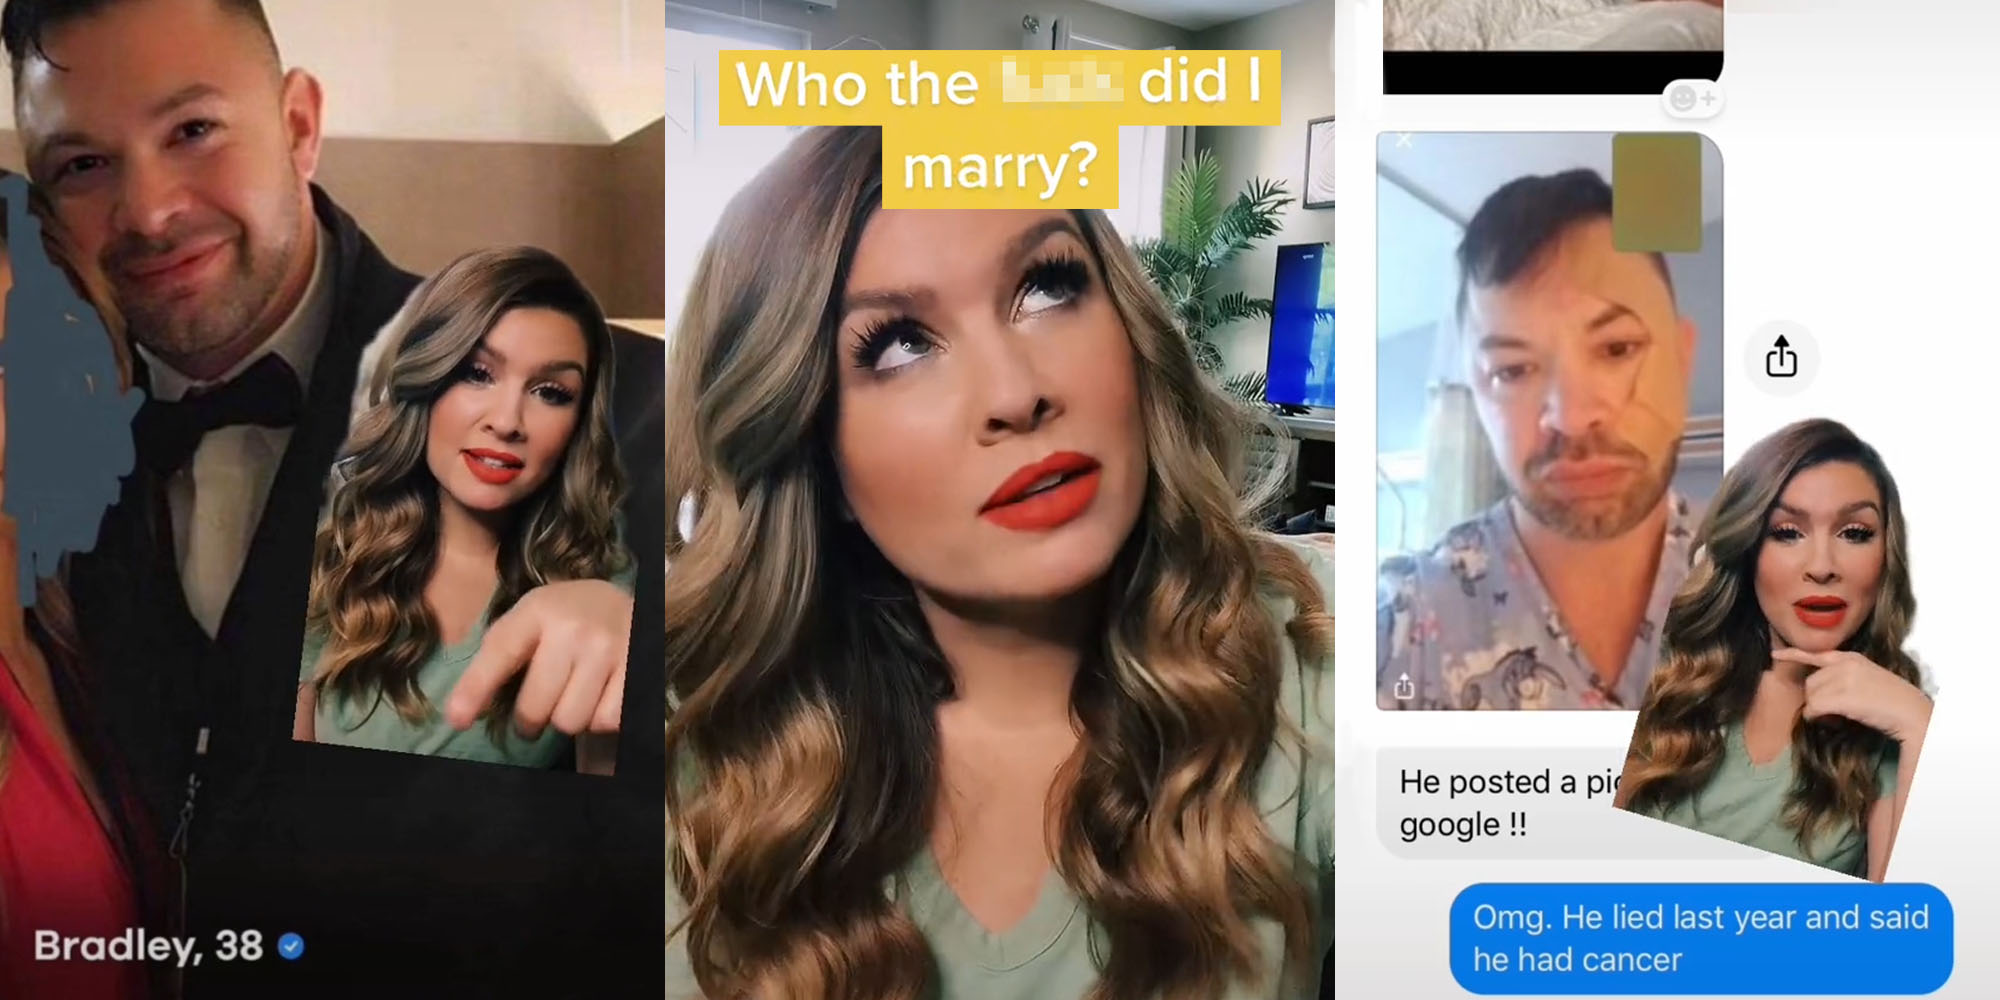 Women Speak Out Against Shared Ex-Husband After TikTok Goes Viral